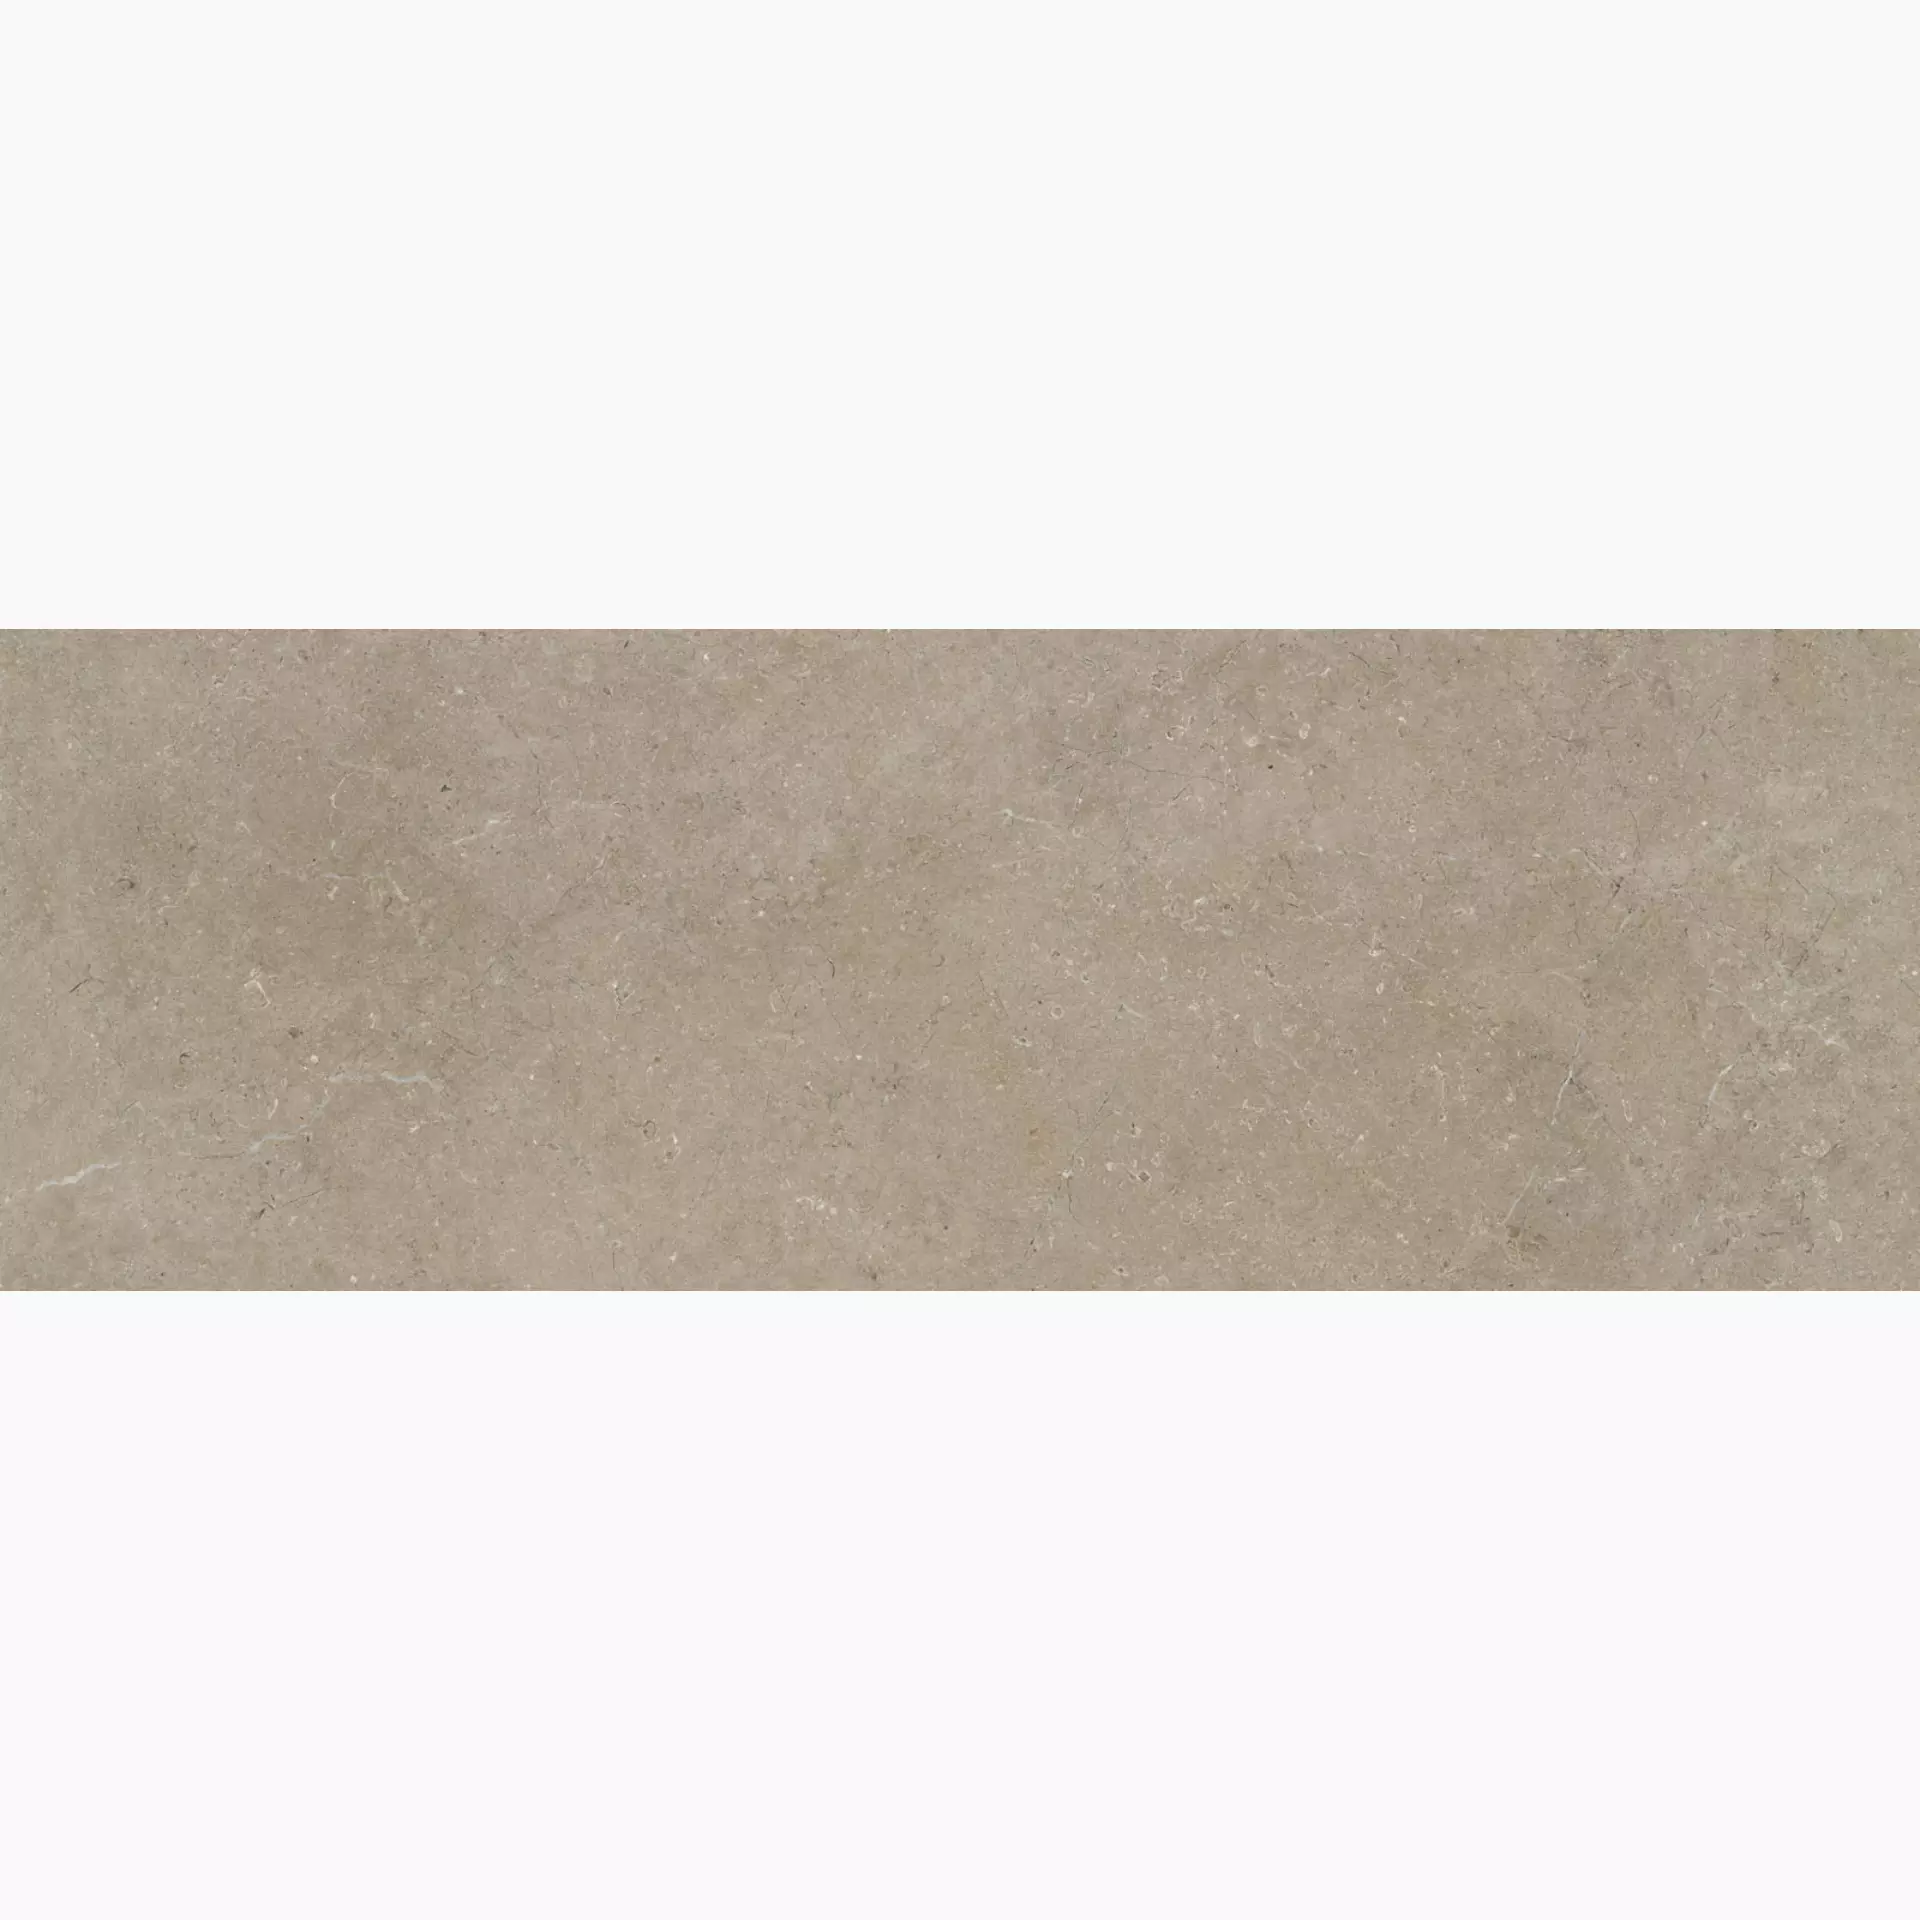 Marazzi Magnifica Limestone Taupe Naturale – Matt M795 60x180cm rectified 7mm